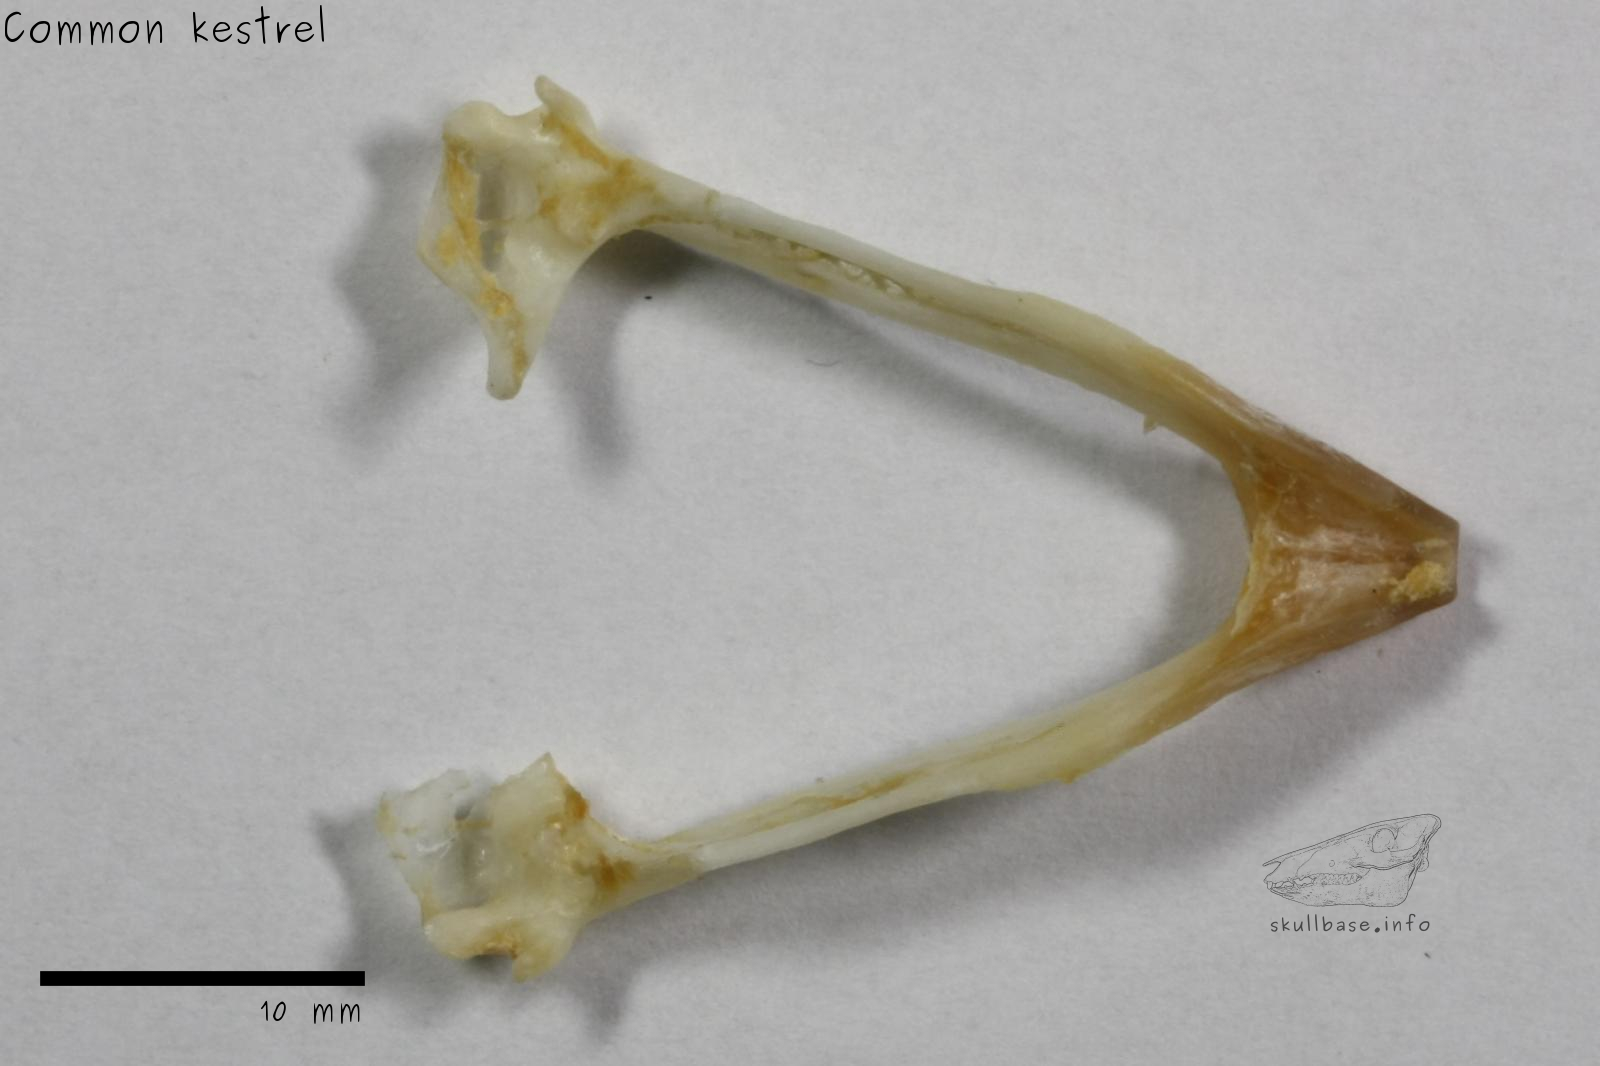 Common kestrel (Falco tinnunculus) jaw